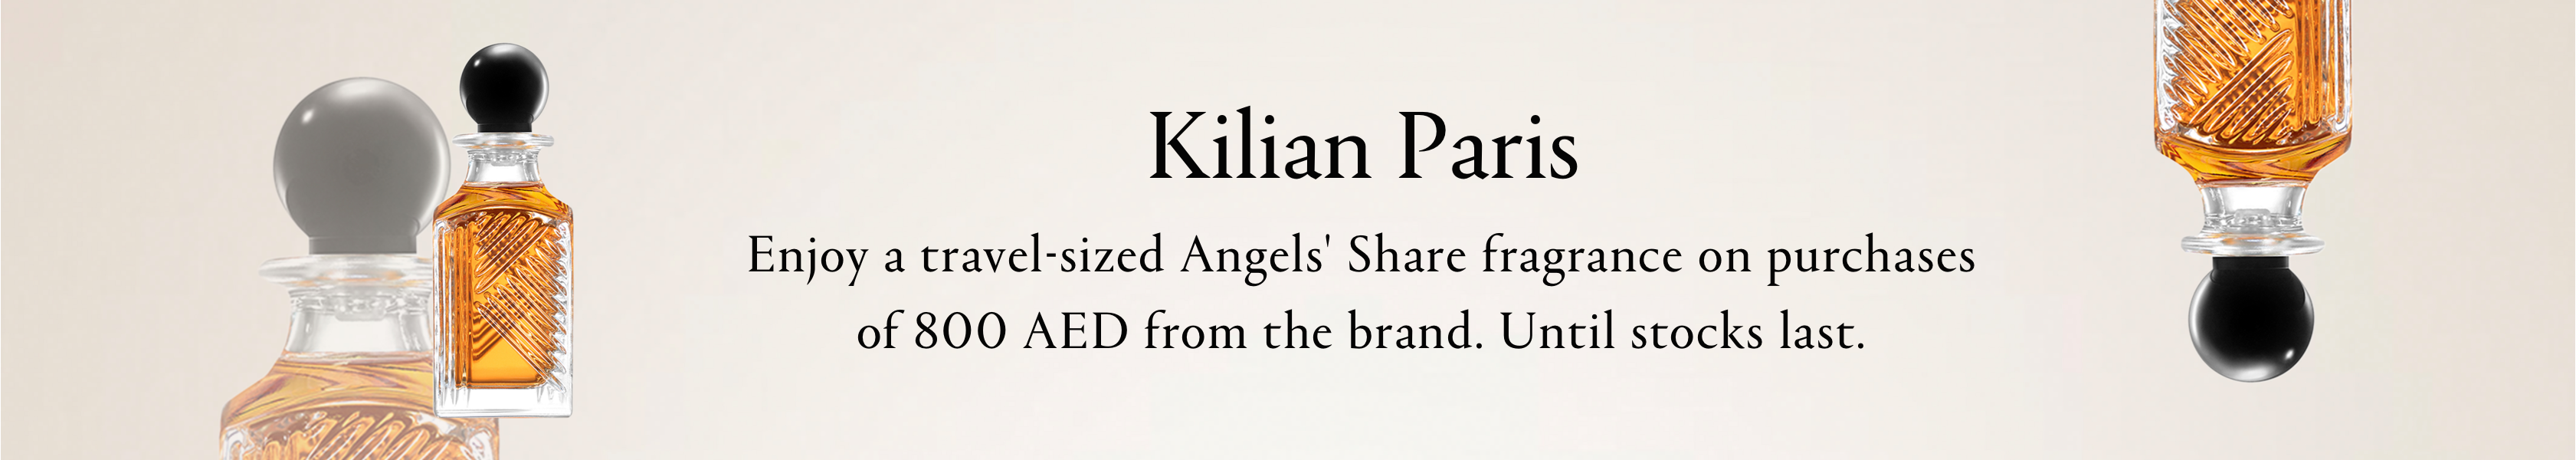 Kilian Paris GWP PDP+PLP Web EN AED WK2